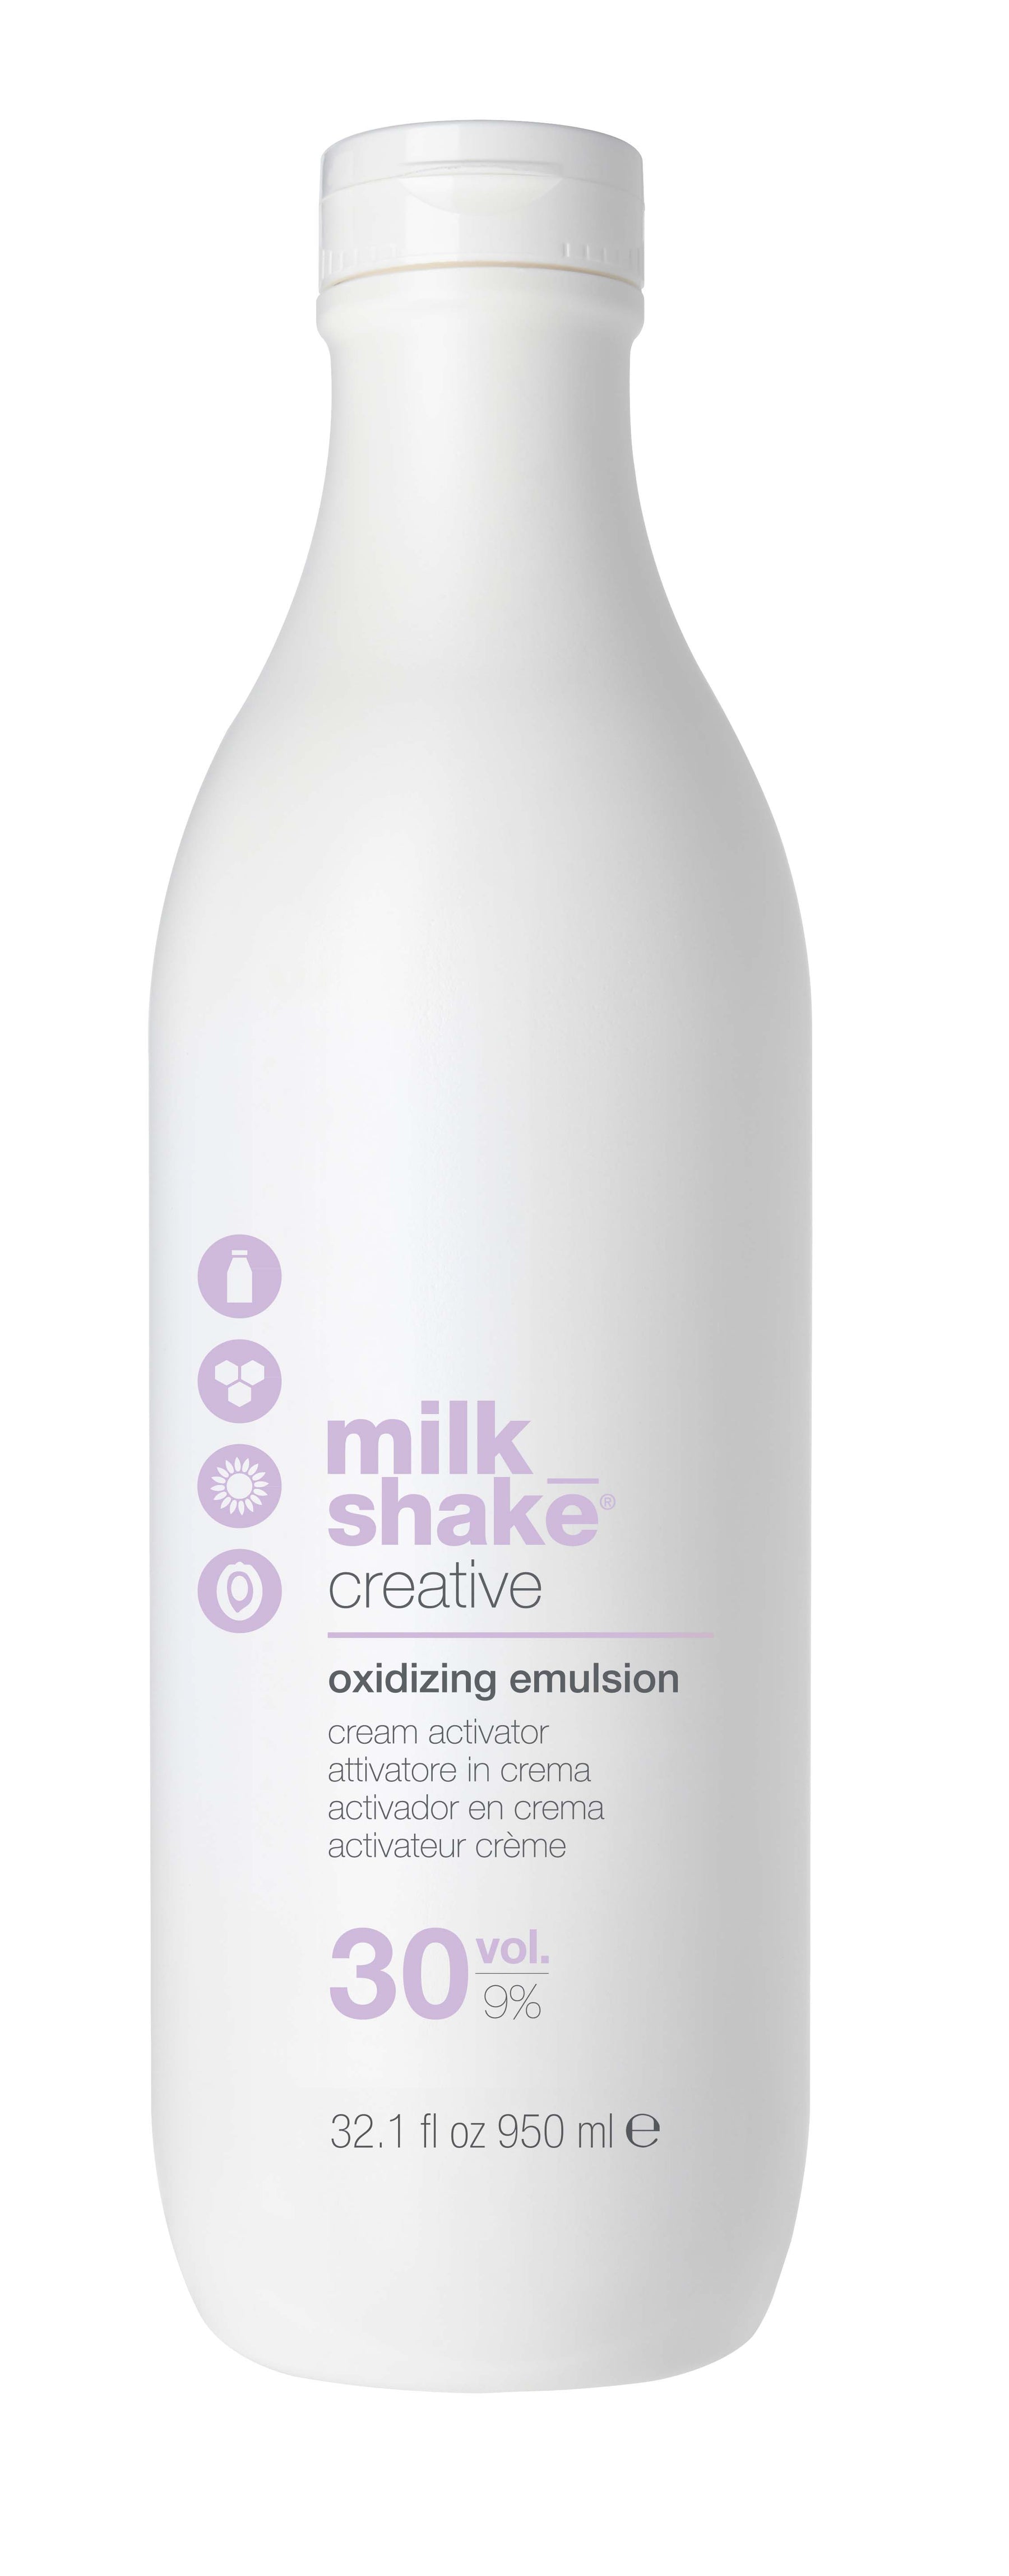 Milk Shake Creative Oxidizing Emulsion 950 ml / 30 Vol. 9%